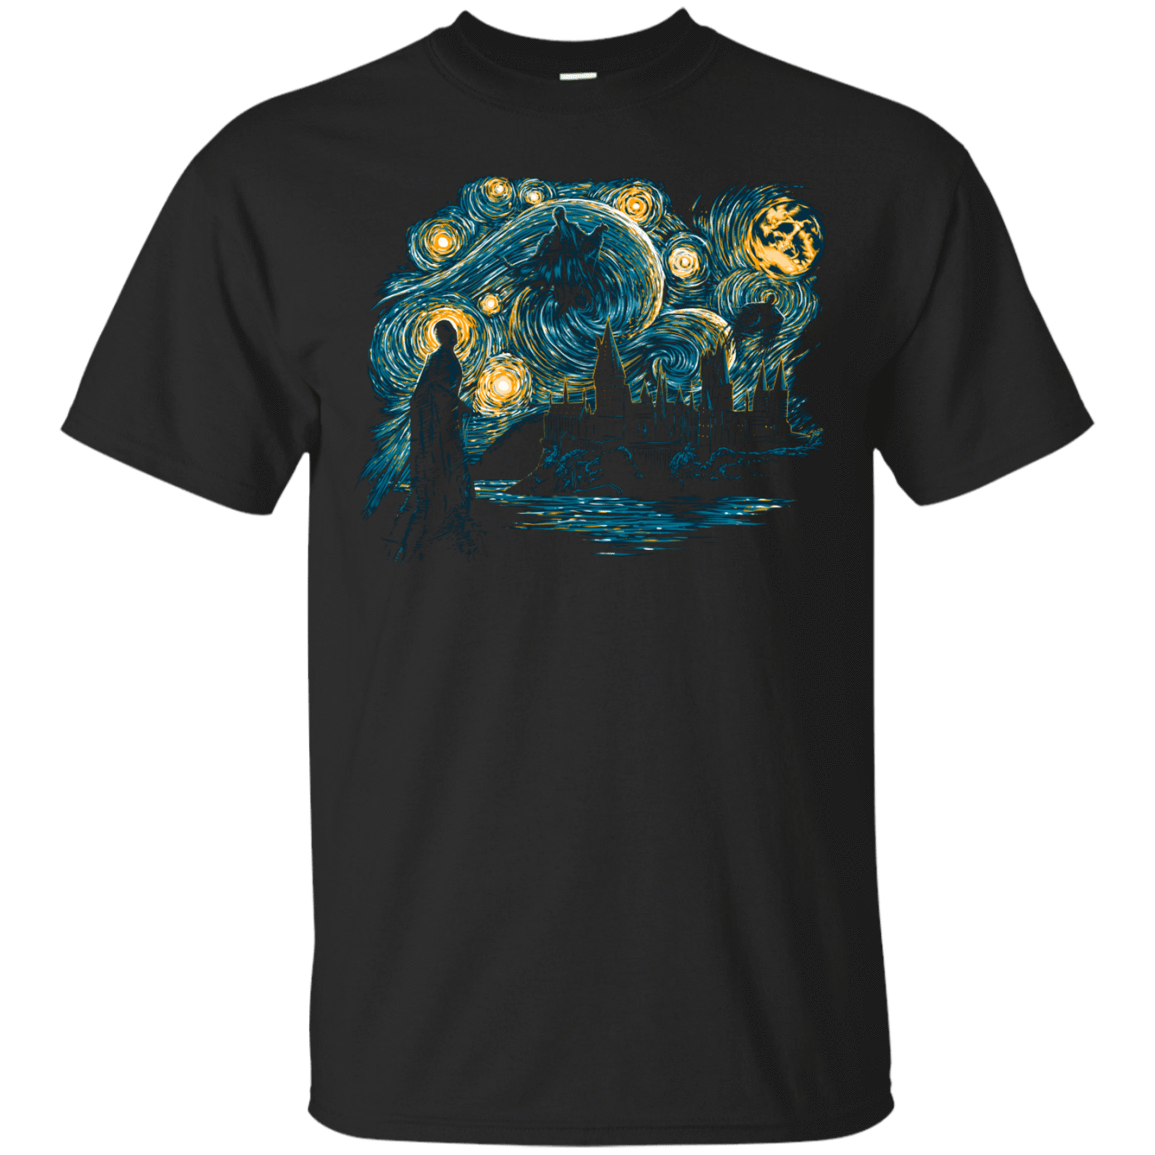 T-Shirts Black / S Starry Dementors T-Shirt